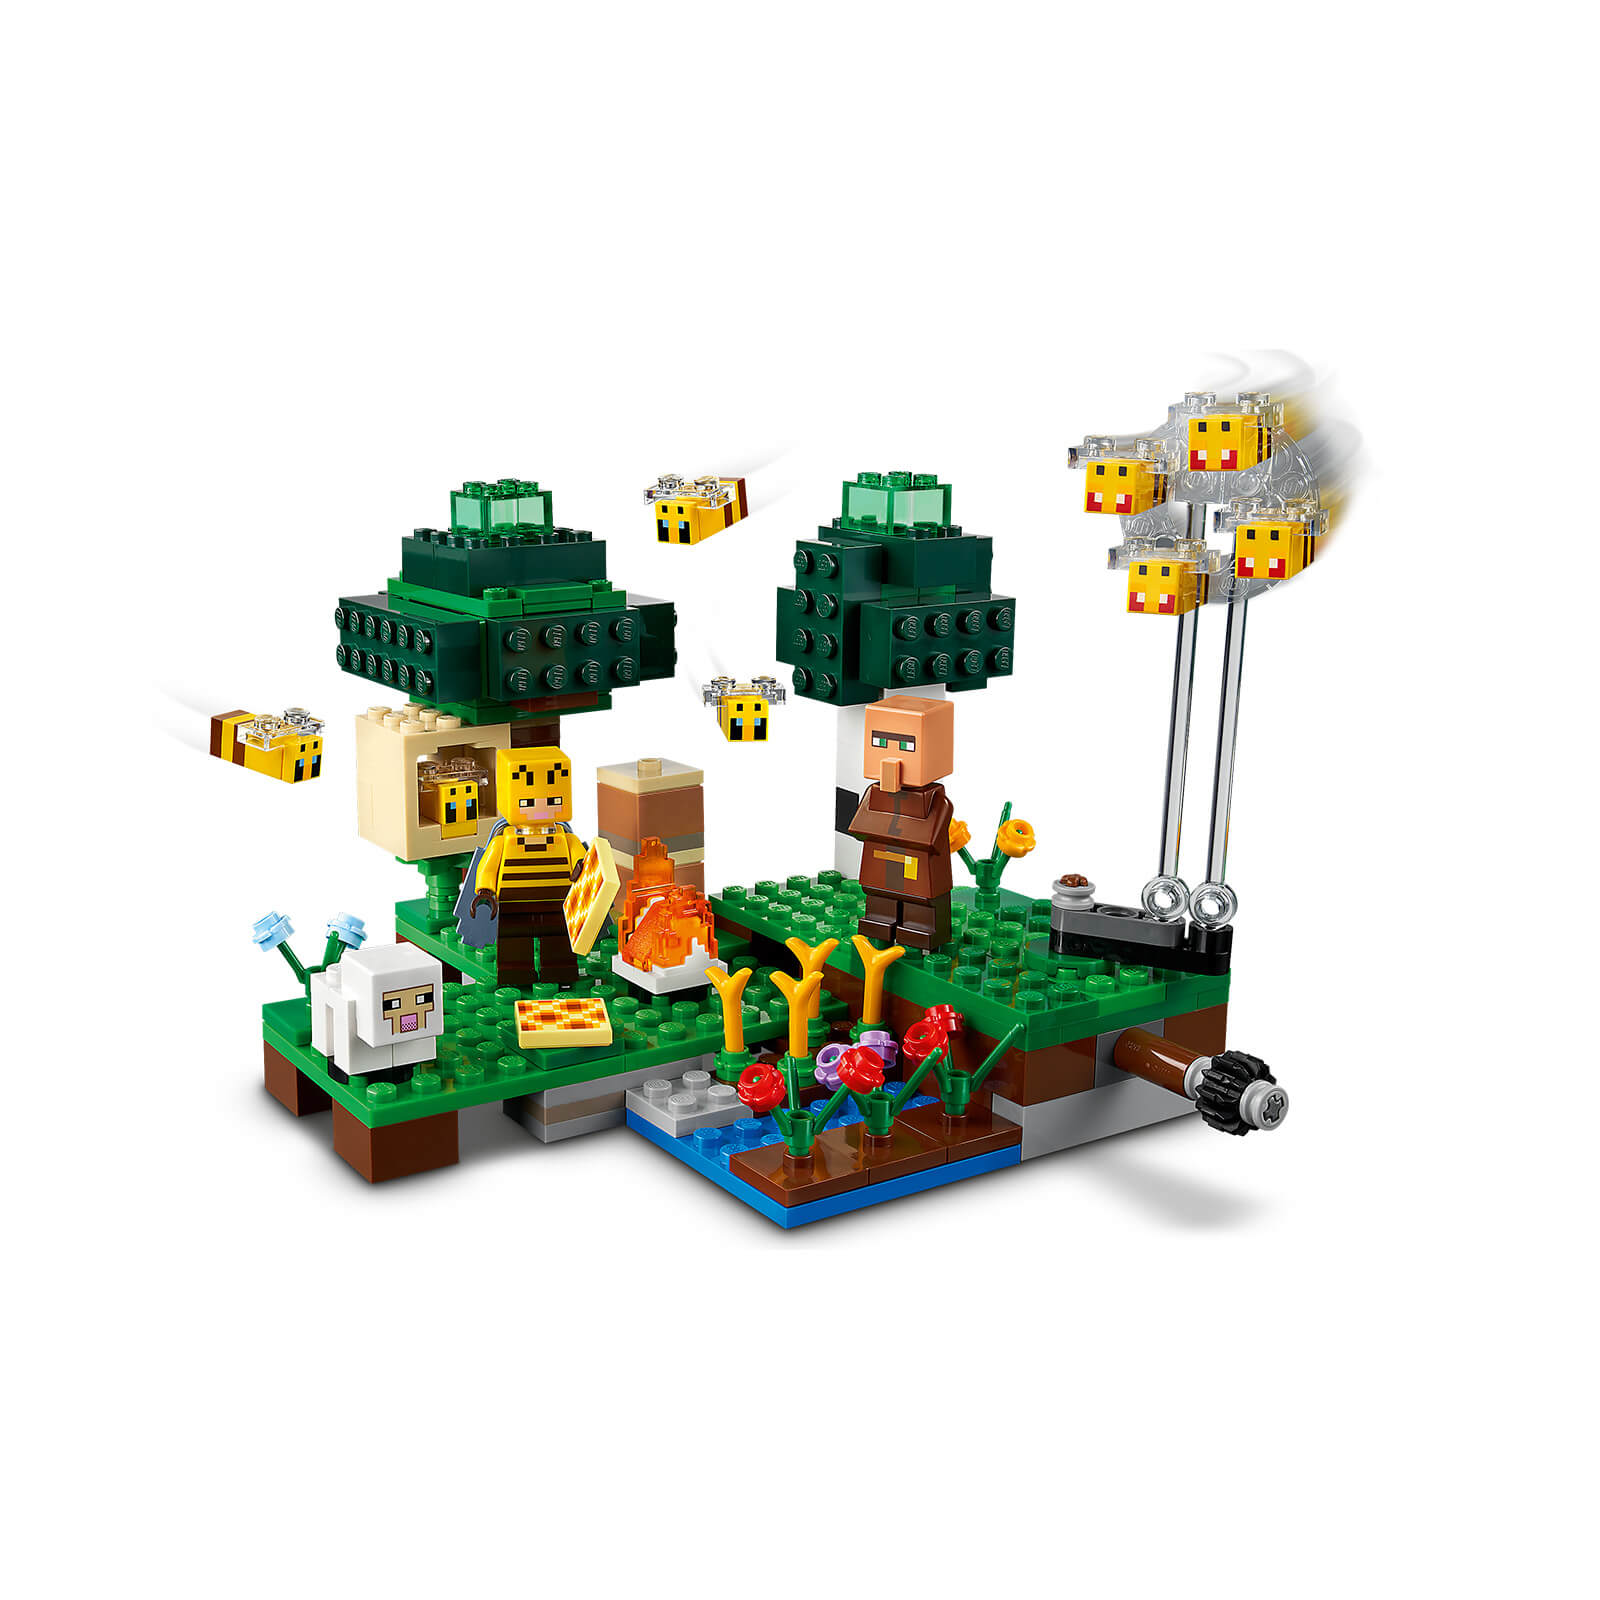 LEGO Minecraft: The Bee Farm Set (21165)